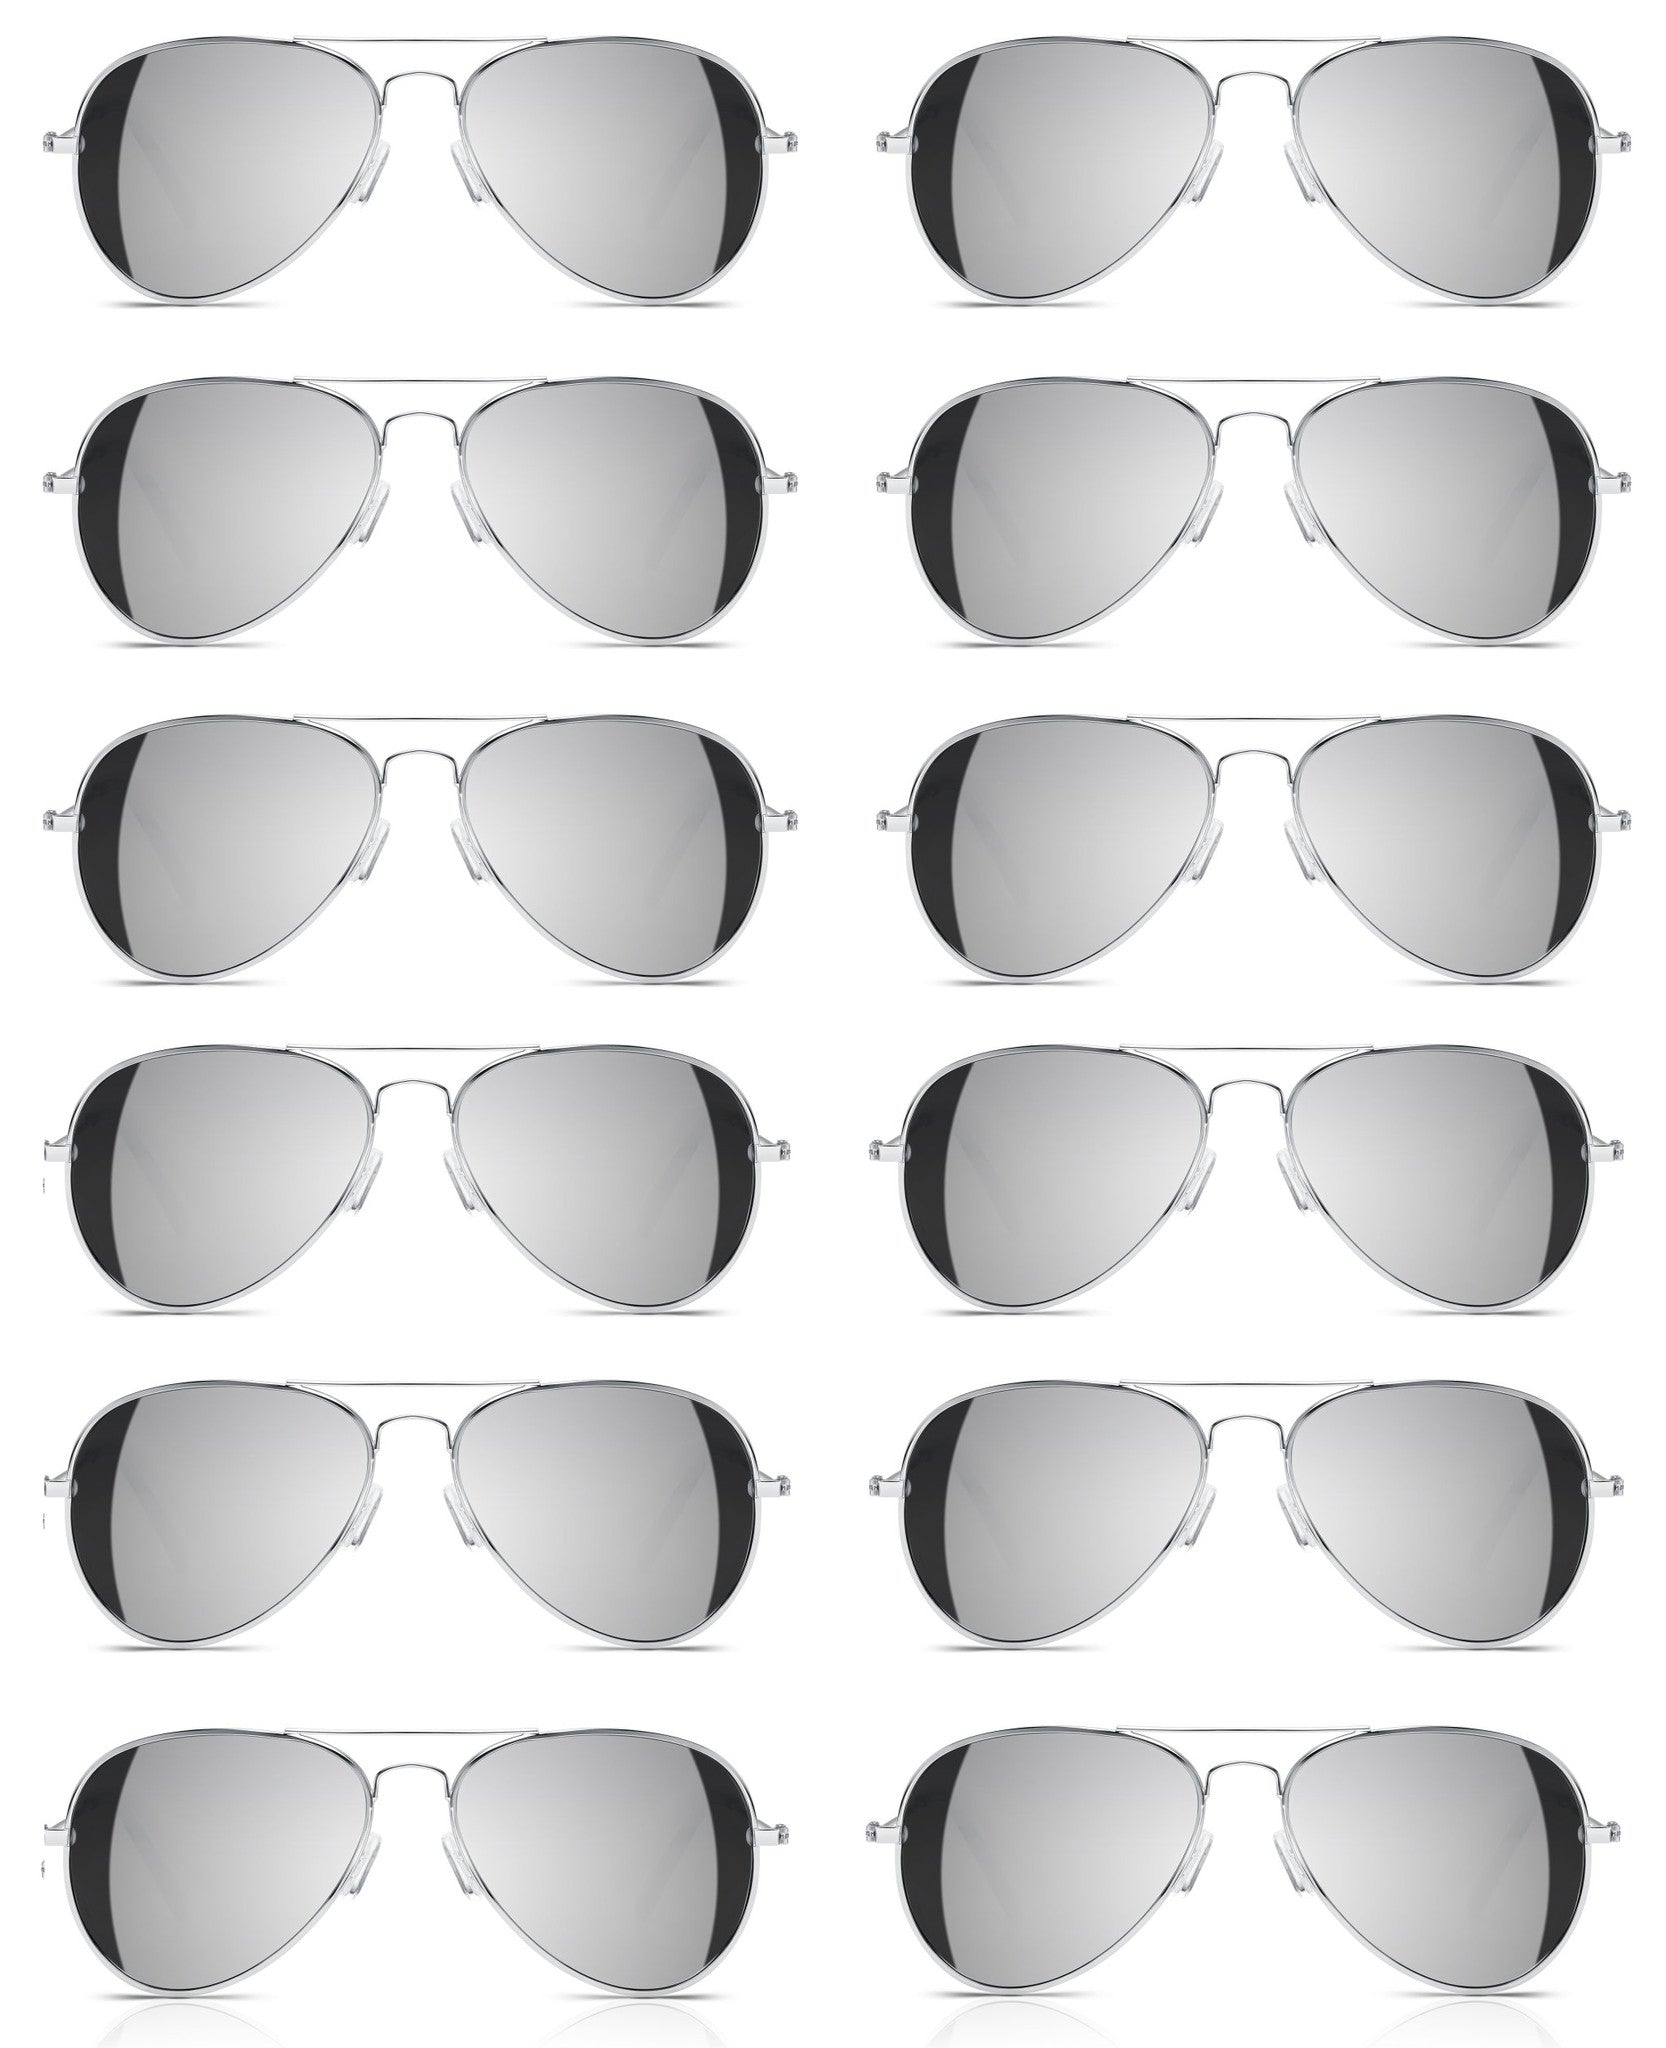 *LOT OF 12* Full Mirror Aviator Sunglasses w/ Metal Silver Frame Classic Retro - Neon Nation